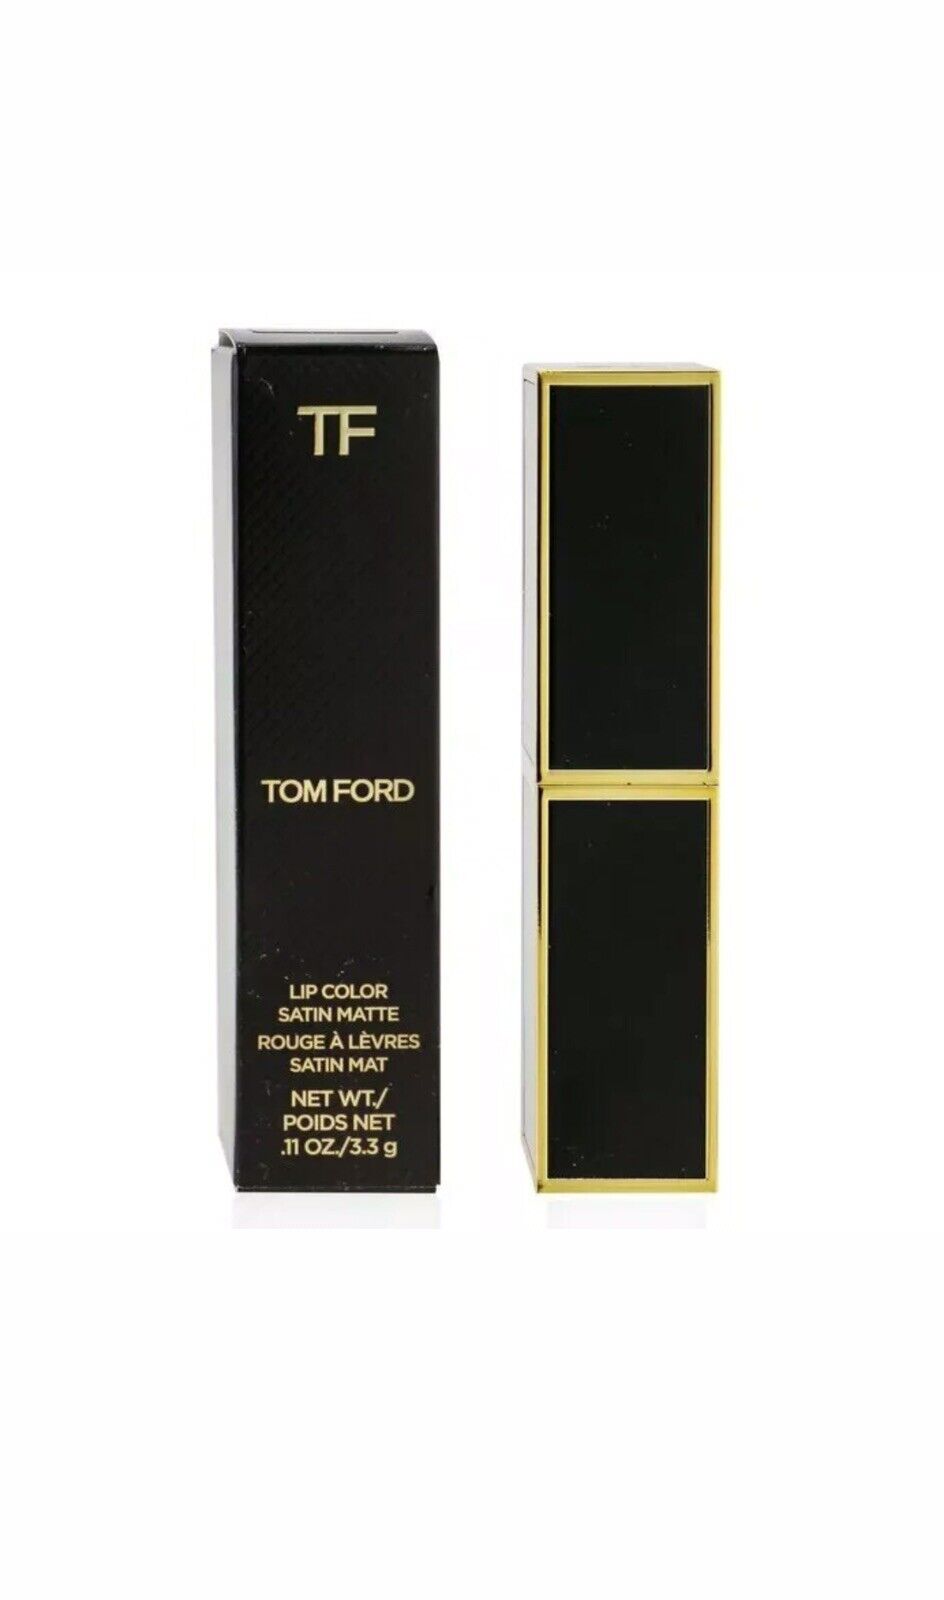 Tom Ford "Marocain 24" Satin Matte Lipstick